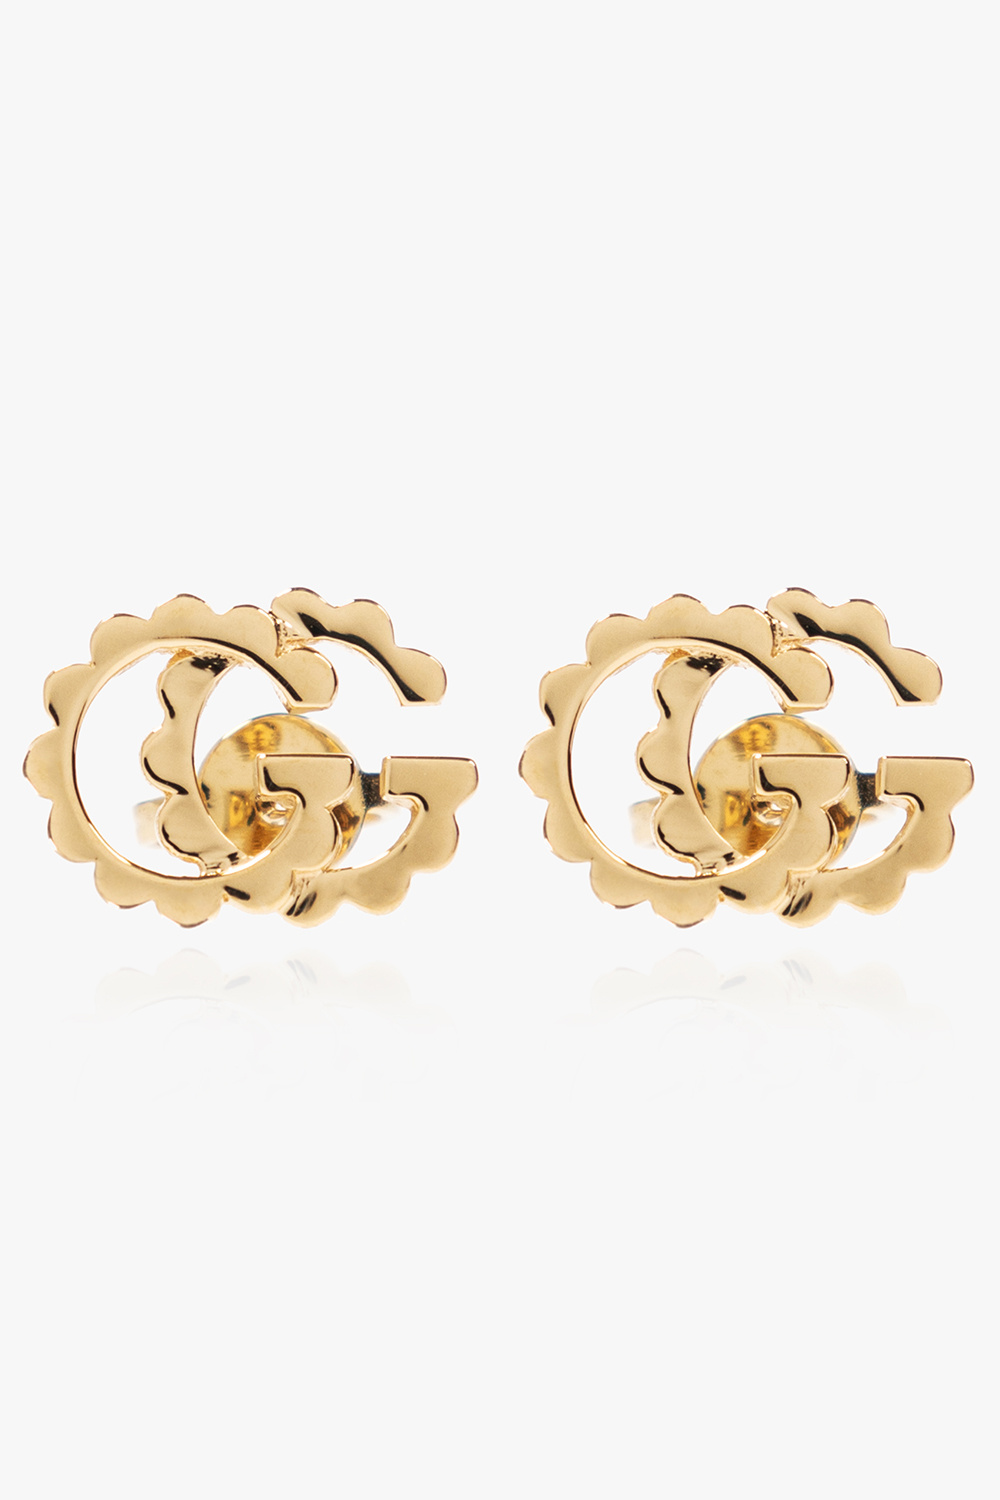 Gucci Gold earrings